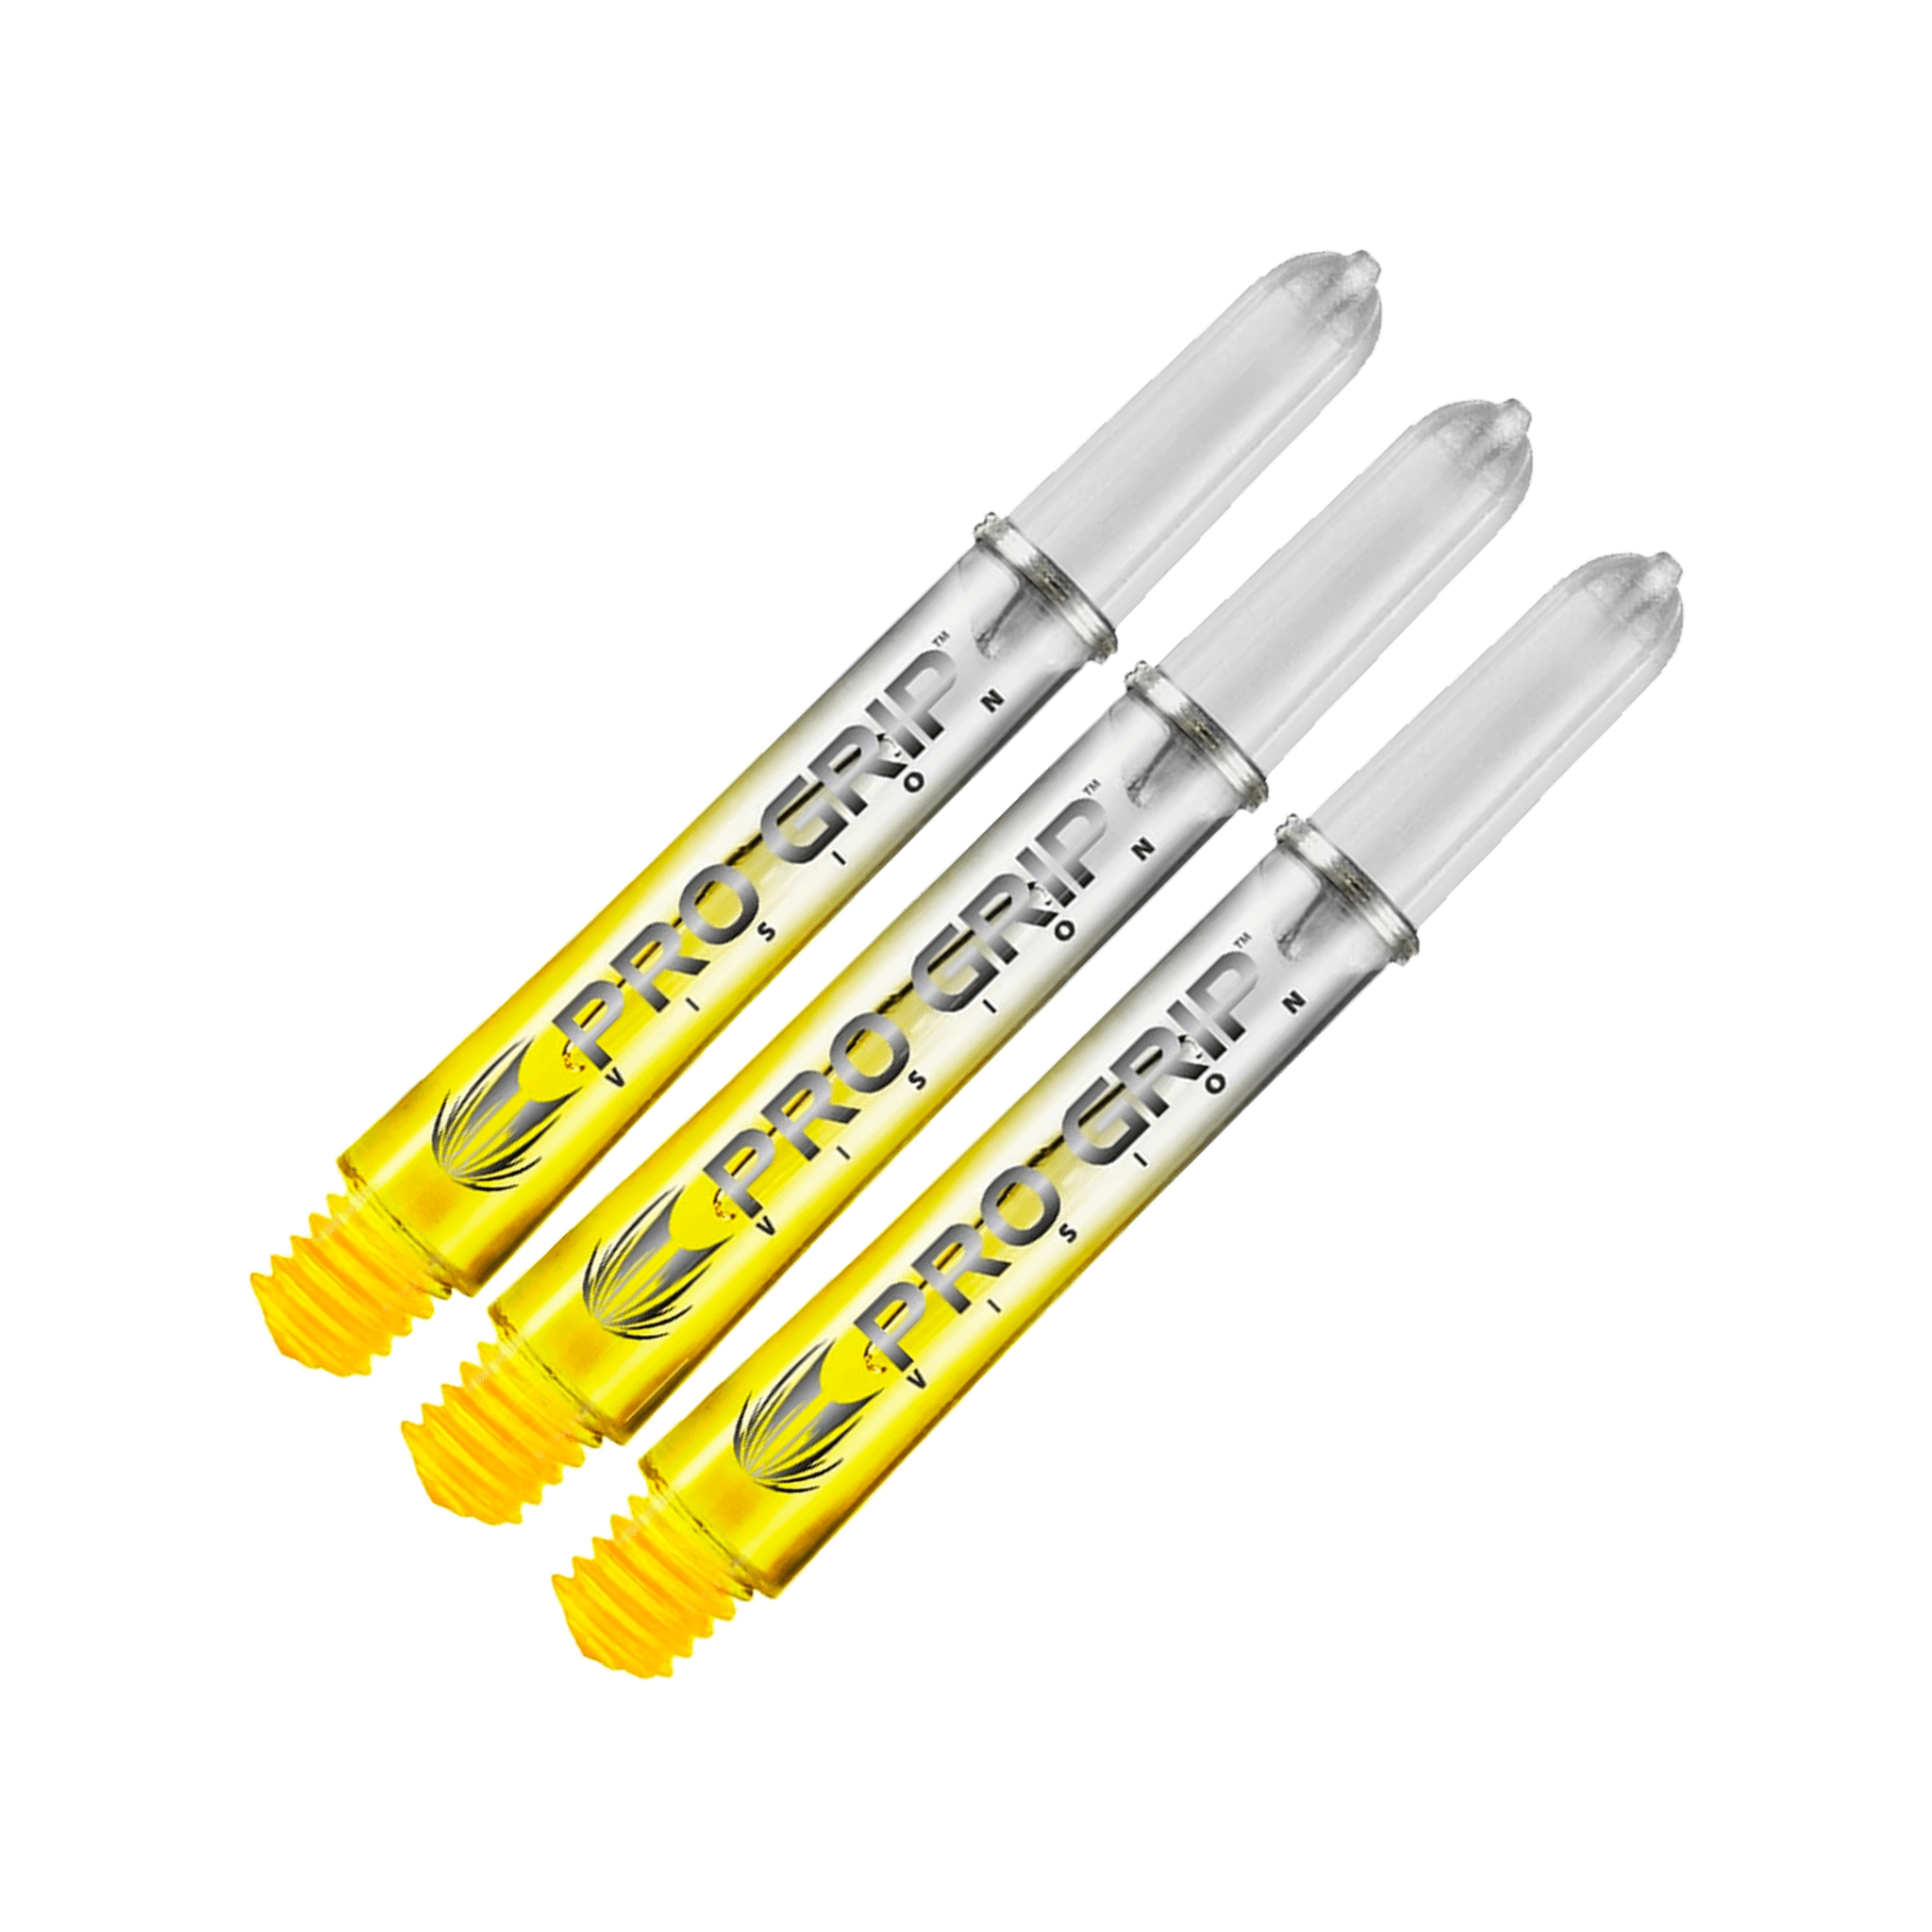 Target Pro Vision - Polycarbonate Dart Shafts Intermediate (41mm) / Yellow Shafts